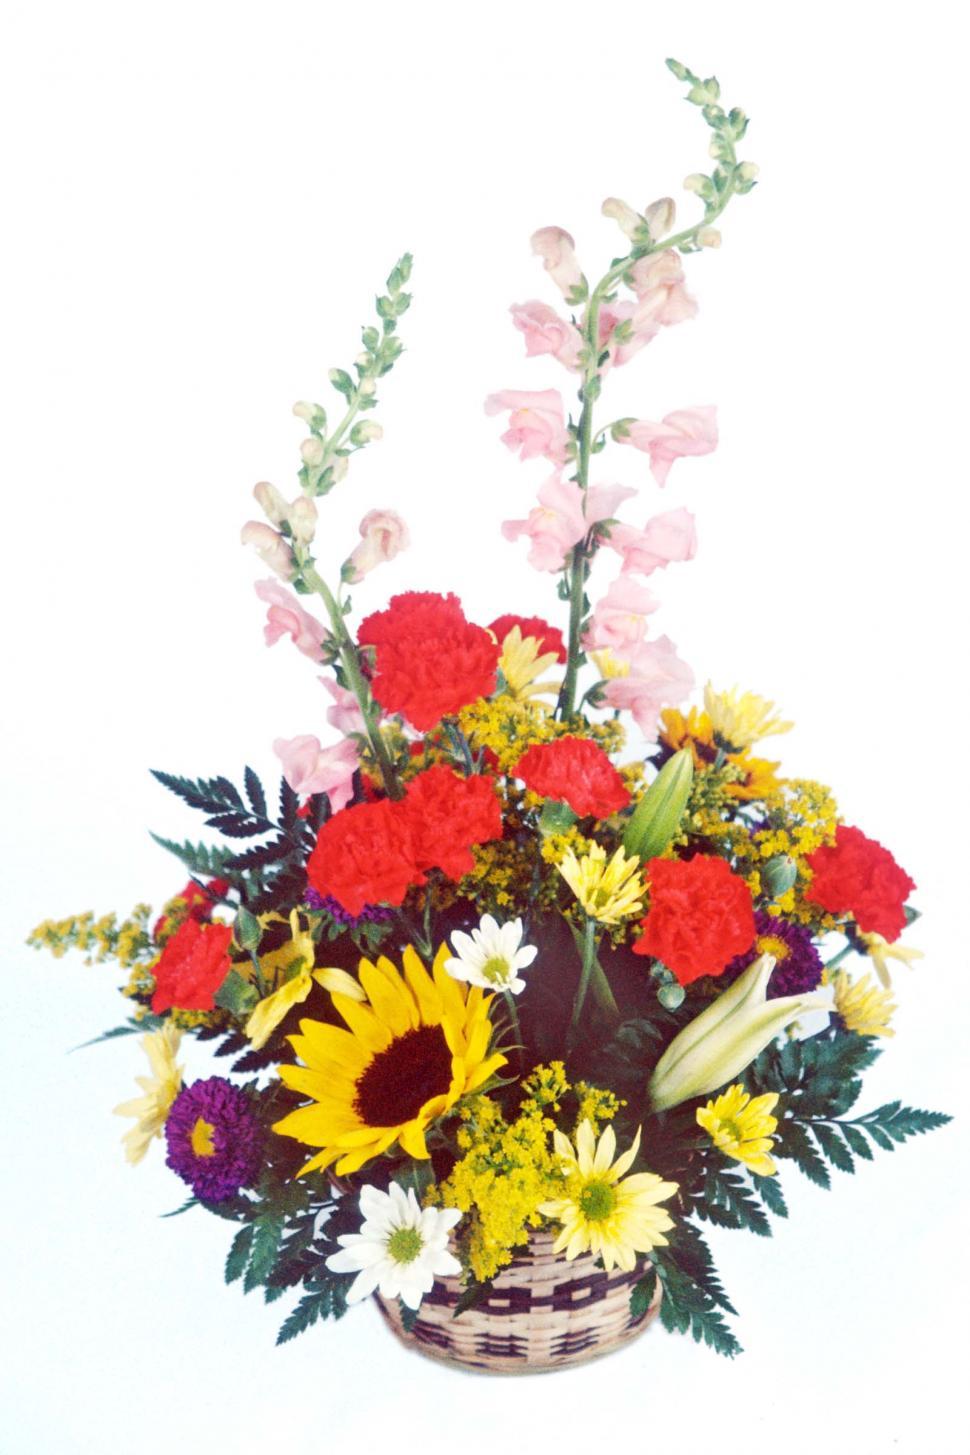 Free Image of Flower arrangement 